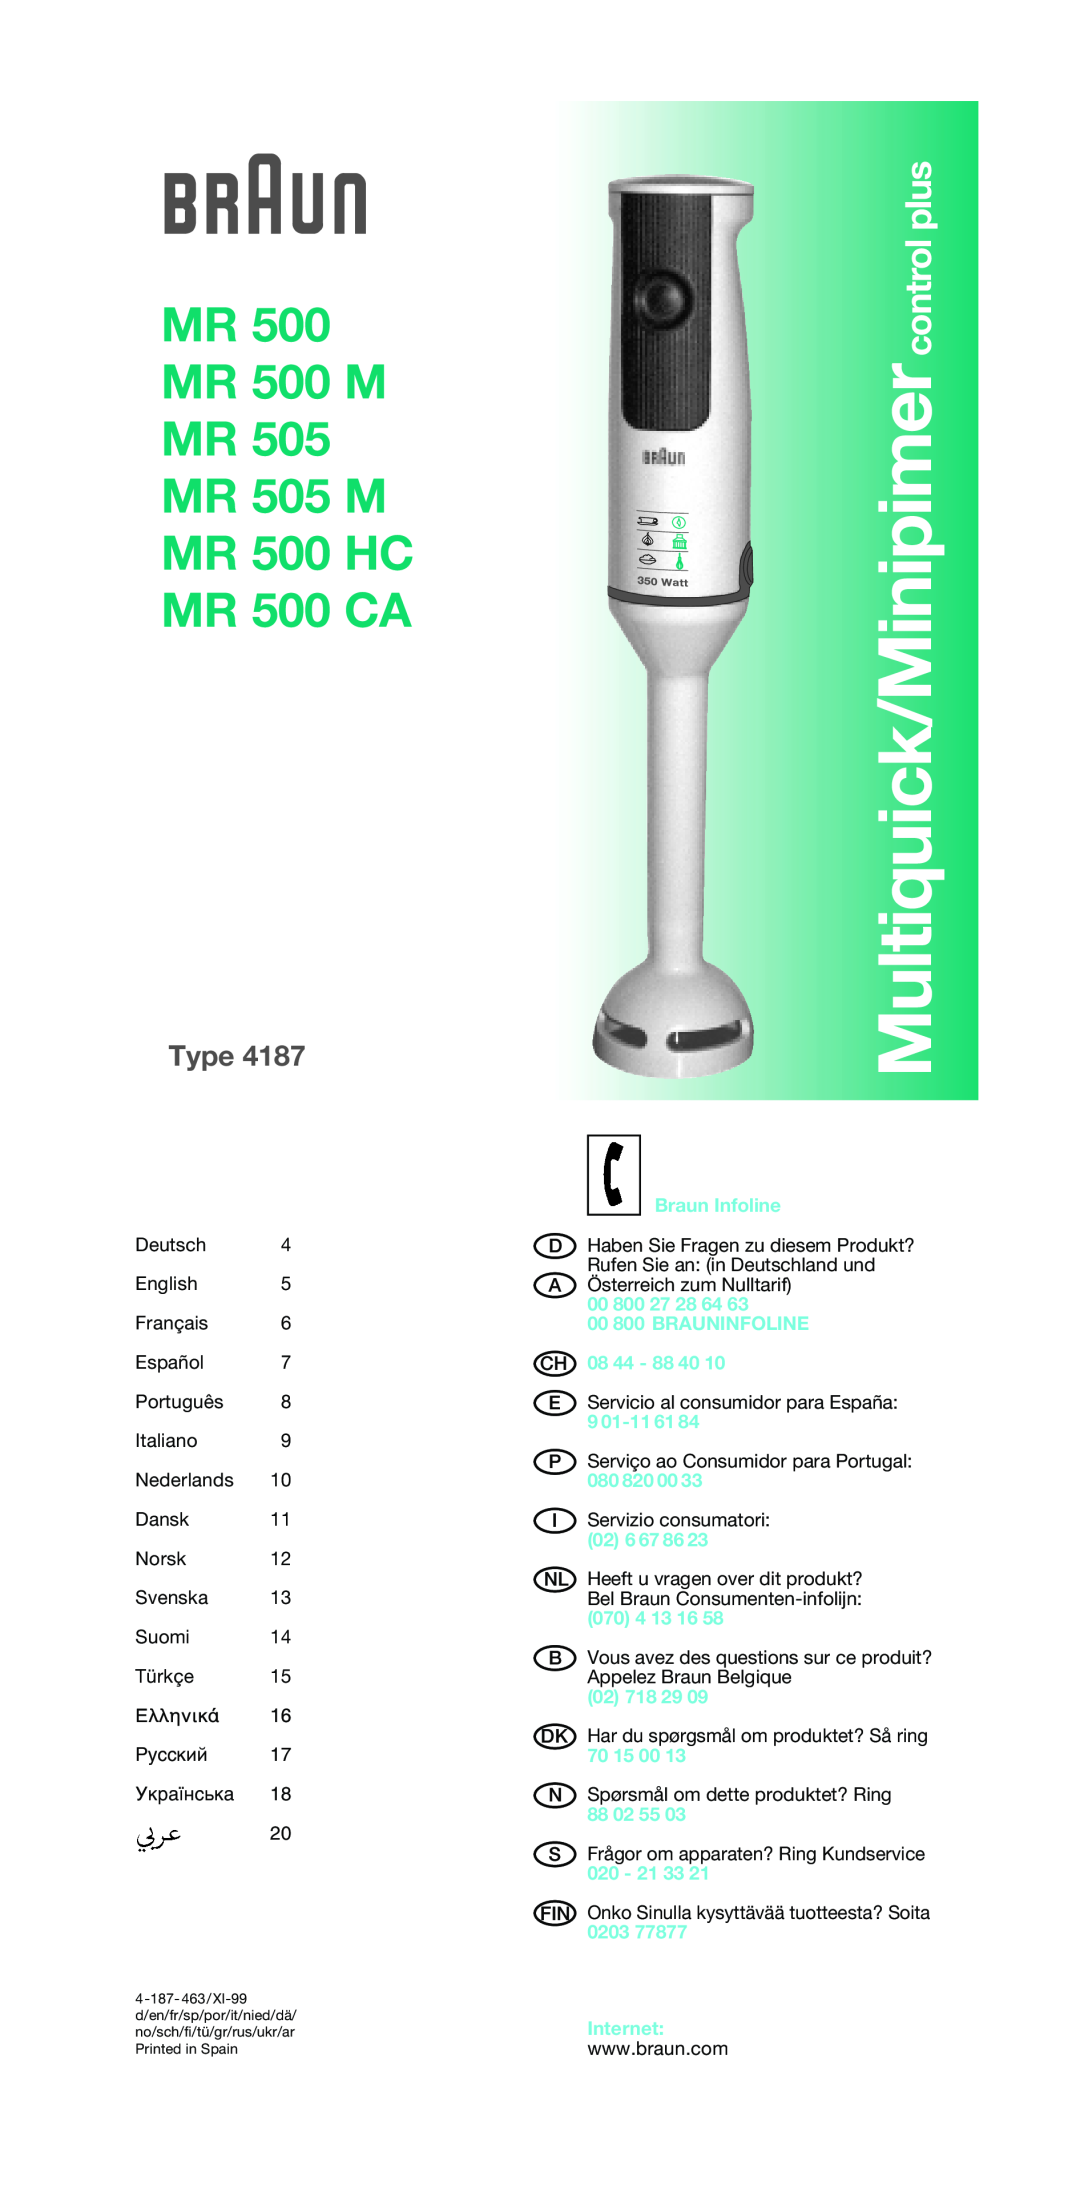 Braun MR 505 M, MR 500 M, MR 500 HC, MR 500 CA manual Multiquick/Minipimercontrol plus, Type 